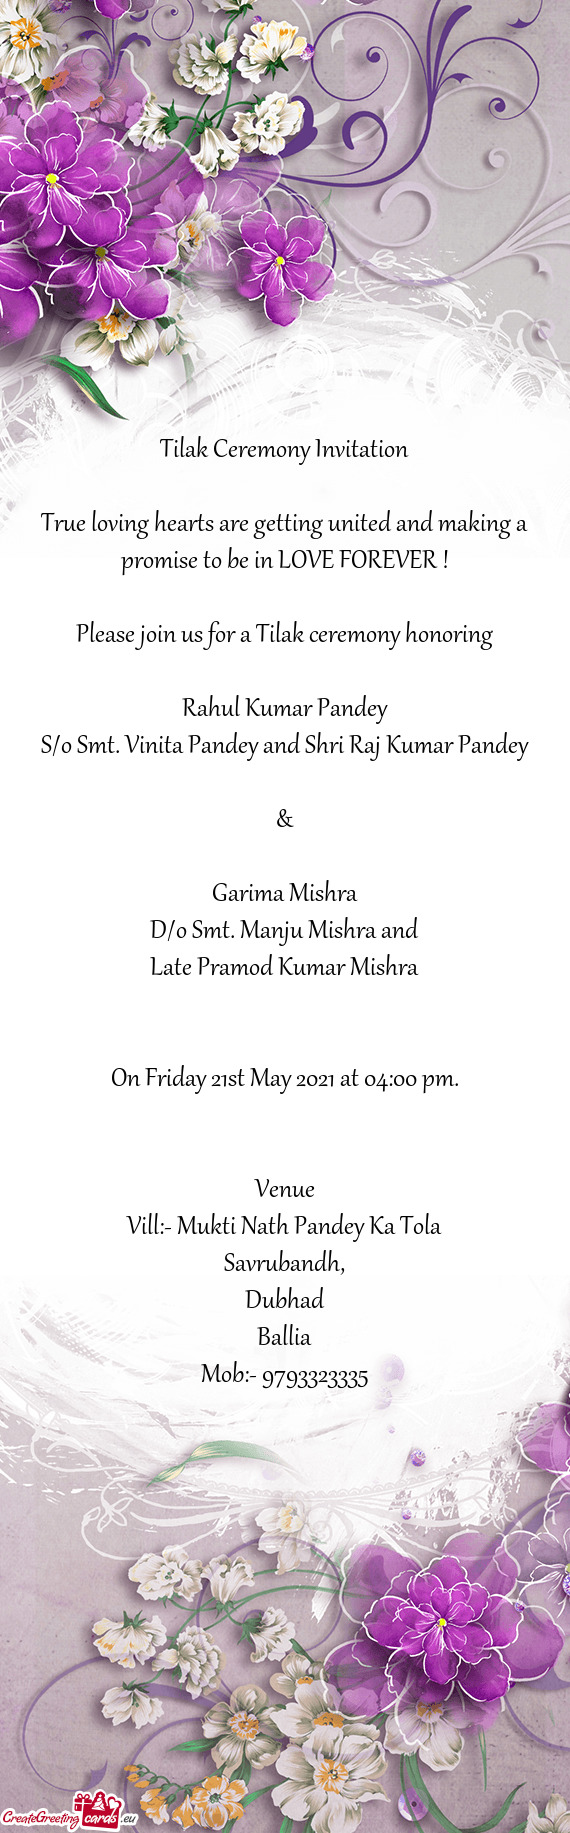 S/o Smt. Vinita Pandey and Shri Raj Kumar Pandey